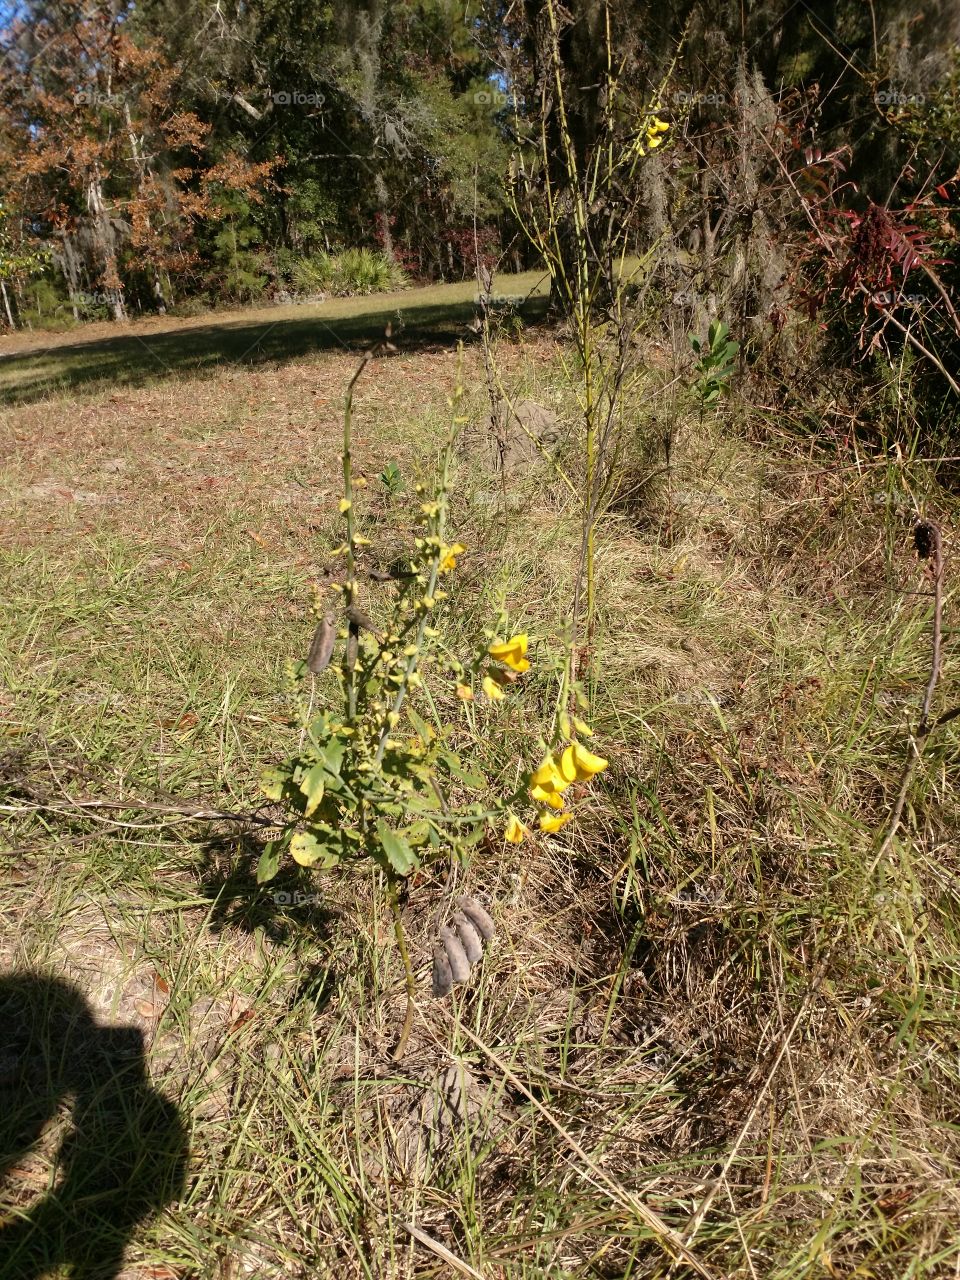 flowers in December down south in Georgia